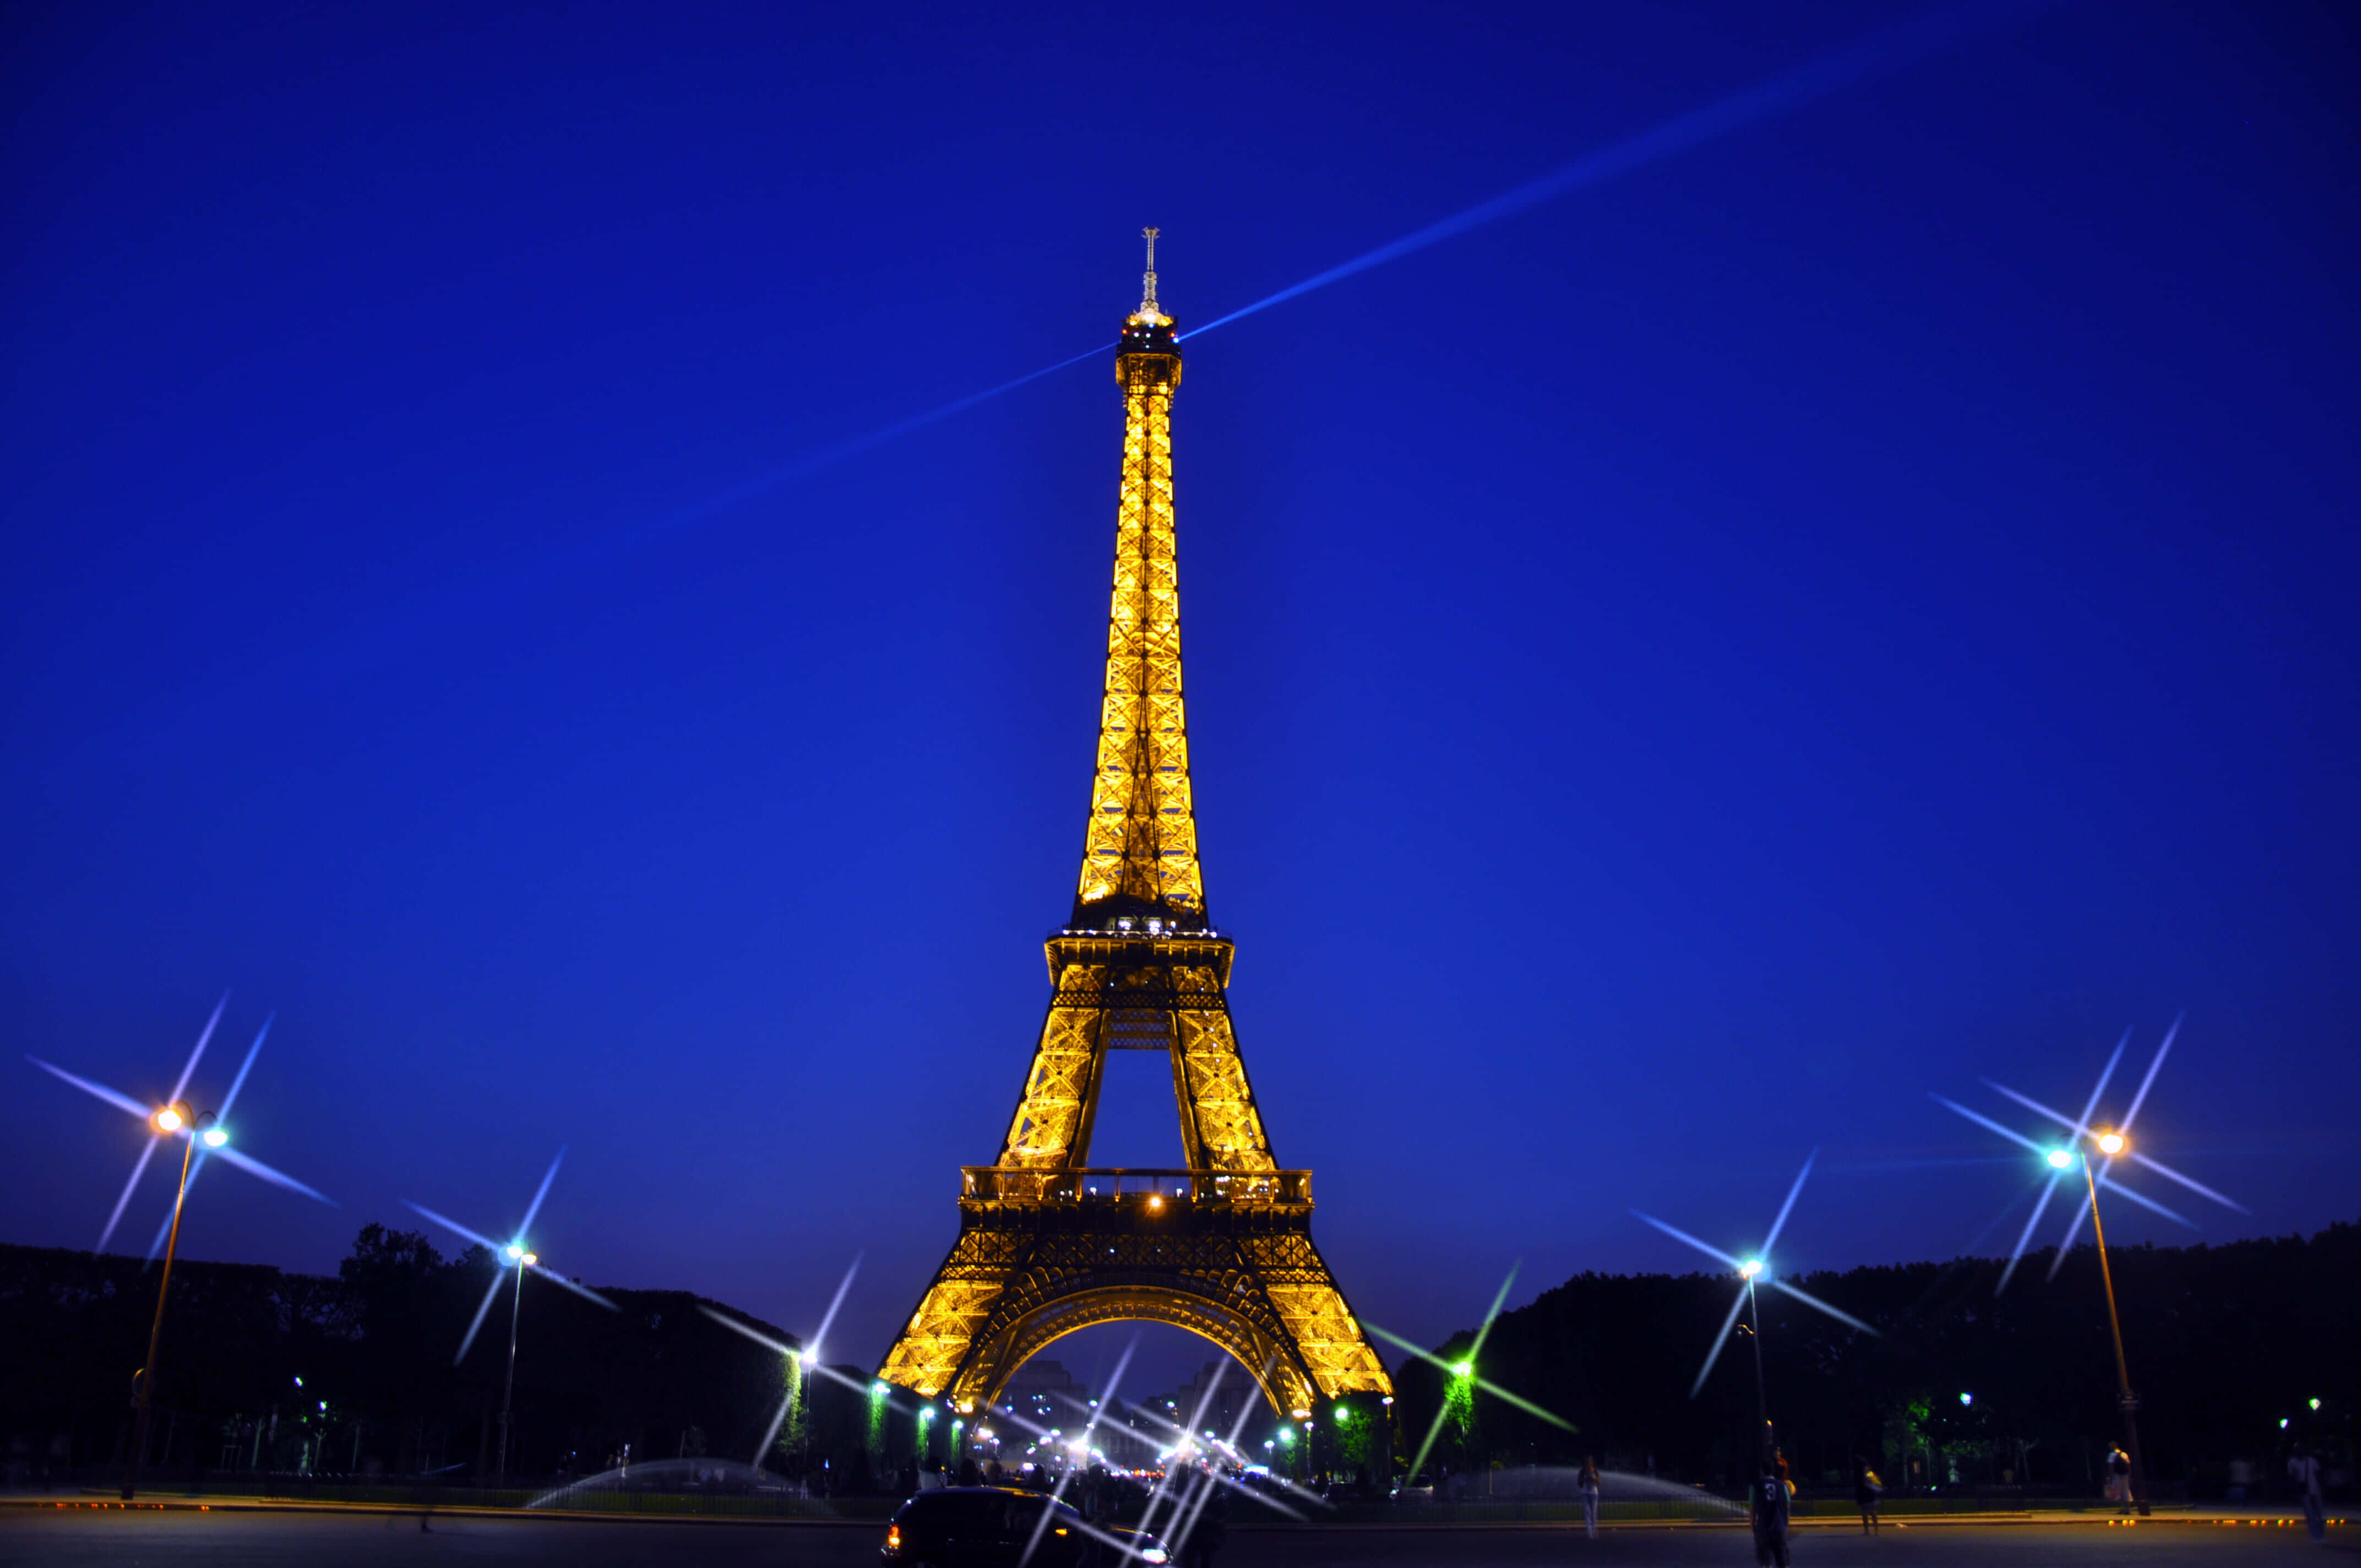 Maravíllatecon La Impresionante Vista De La Torre Eiffel Iluminada En La Noche.